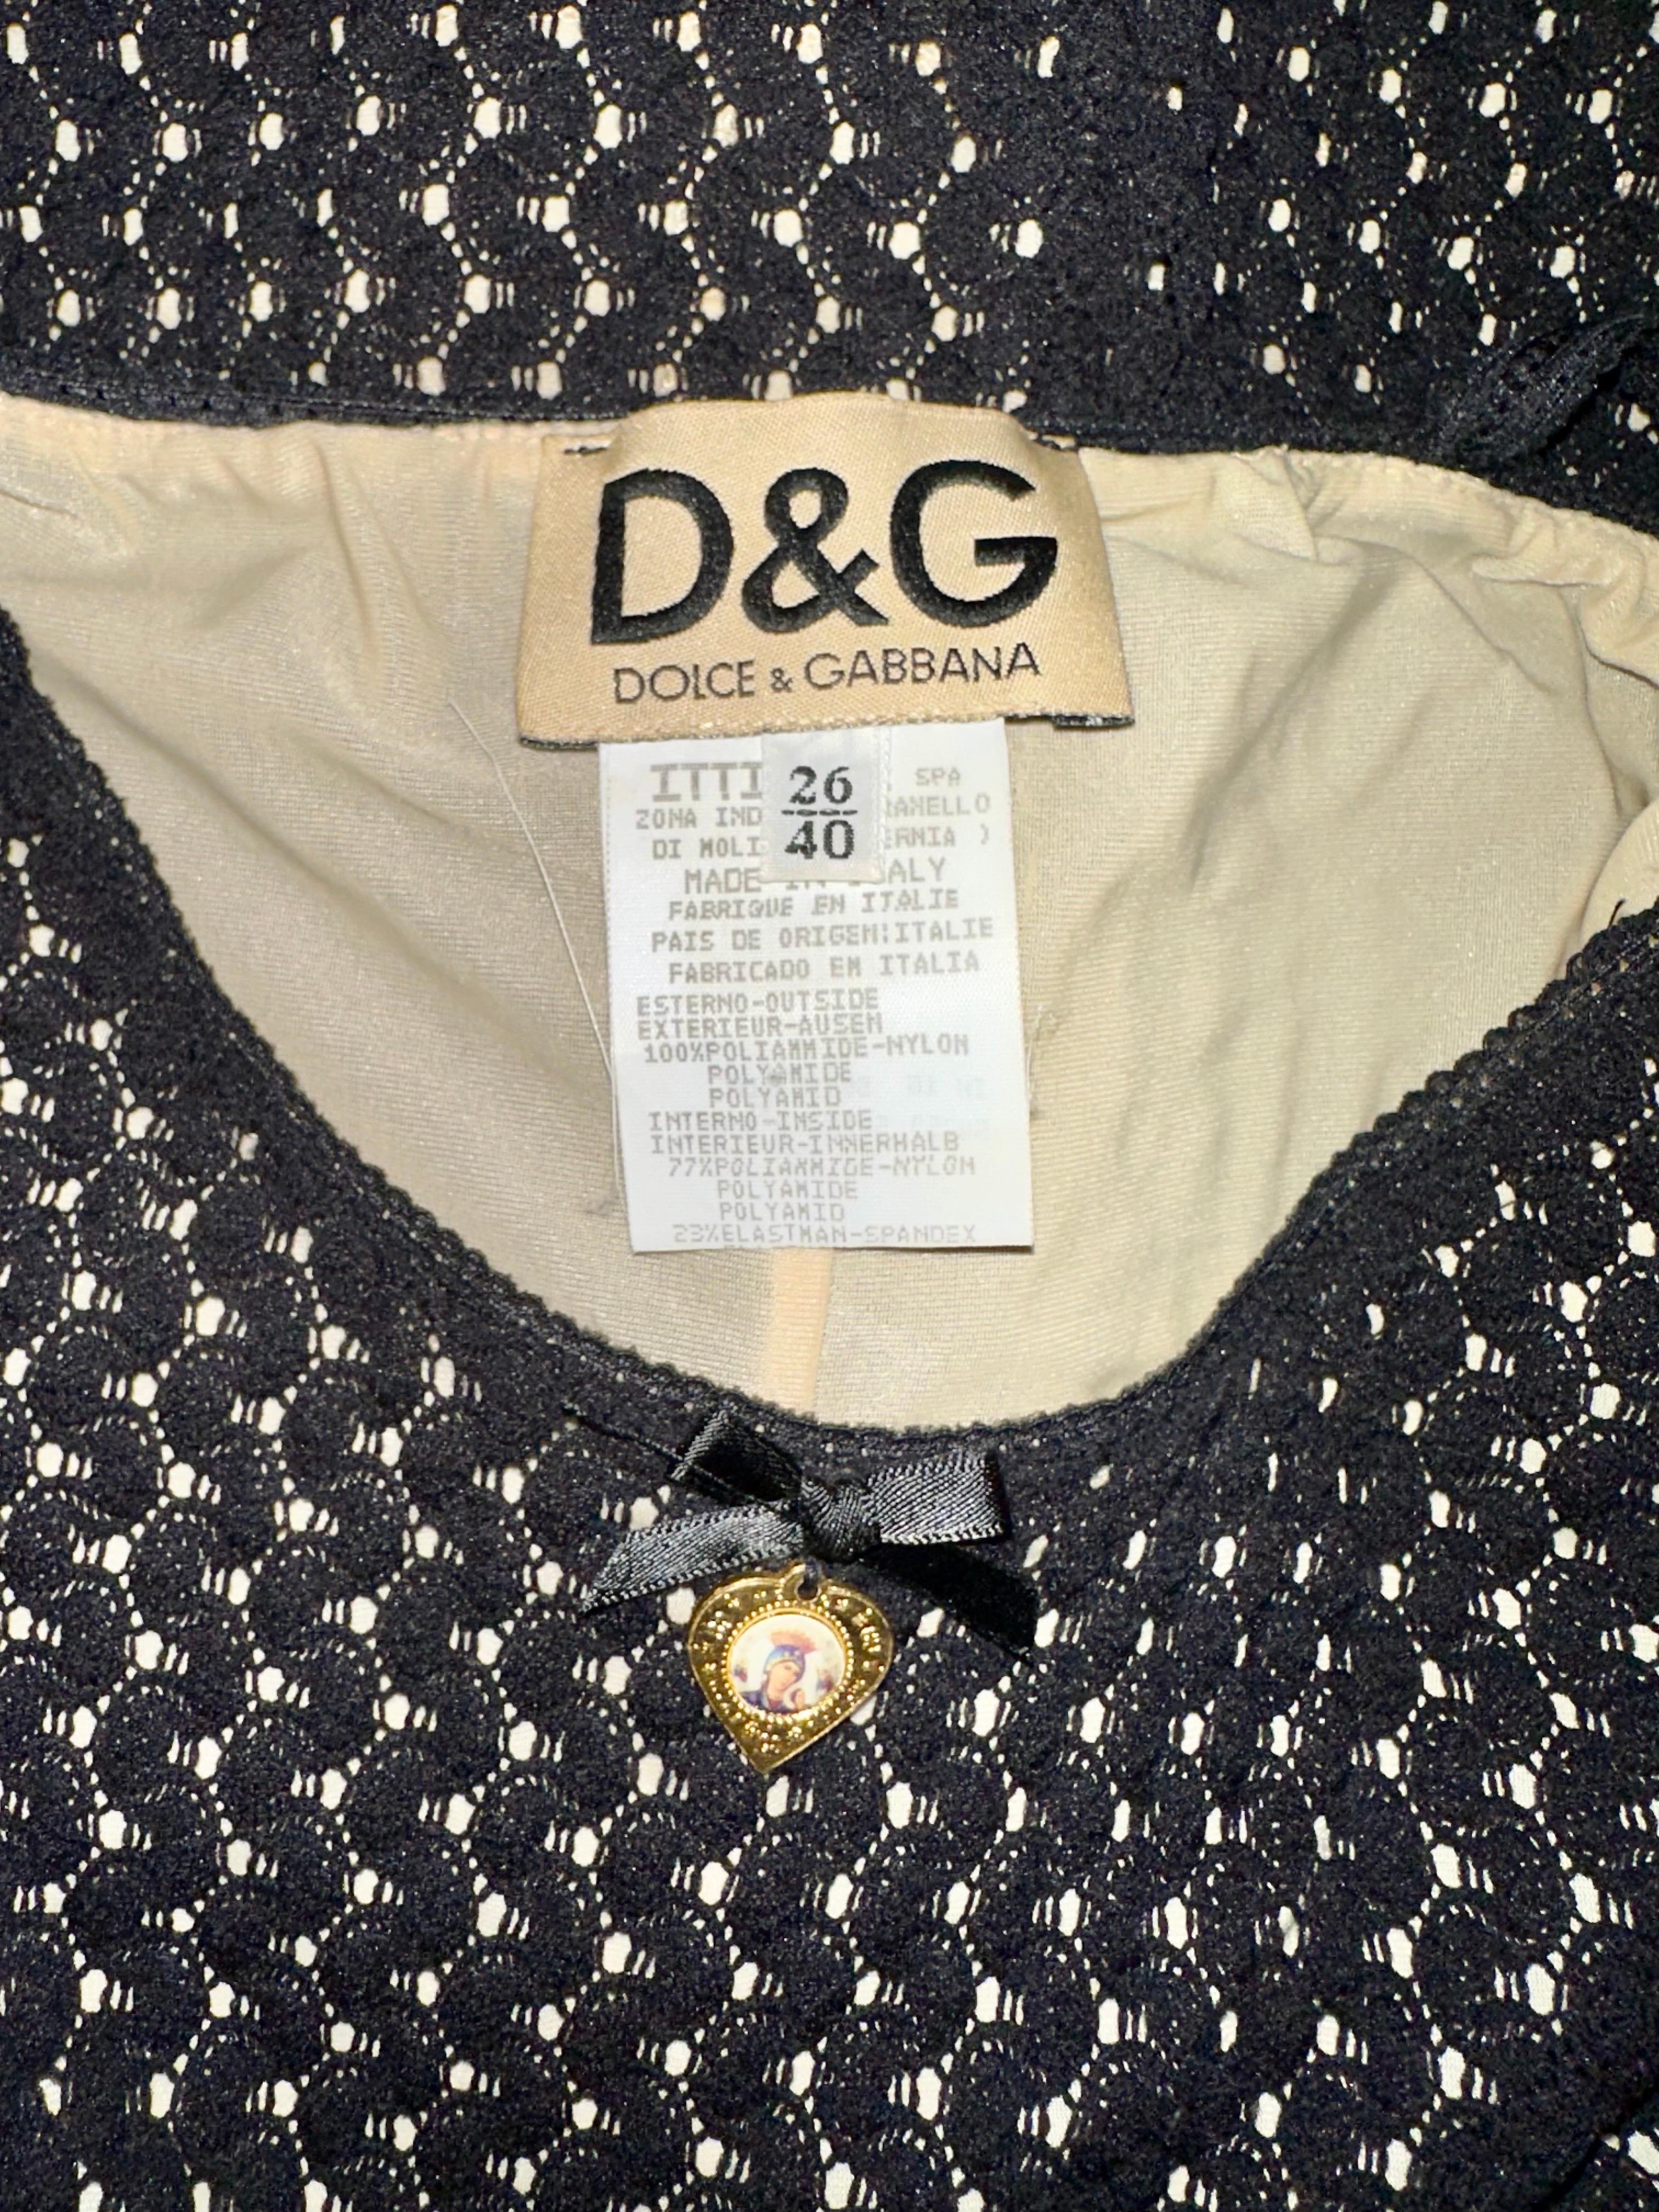 D&G by Dolce & Gabbana 1990's Sheer Knit Fishnet Virgin Mary Charm Black Dress 4